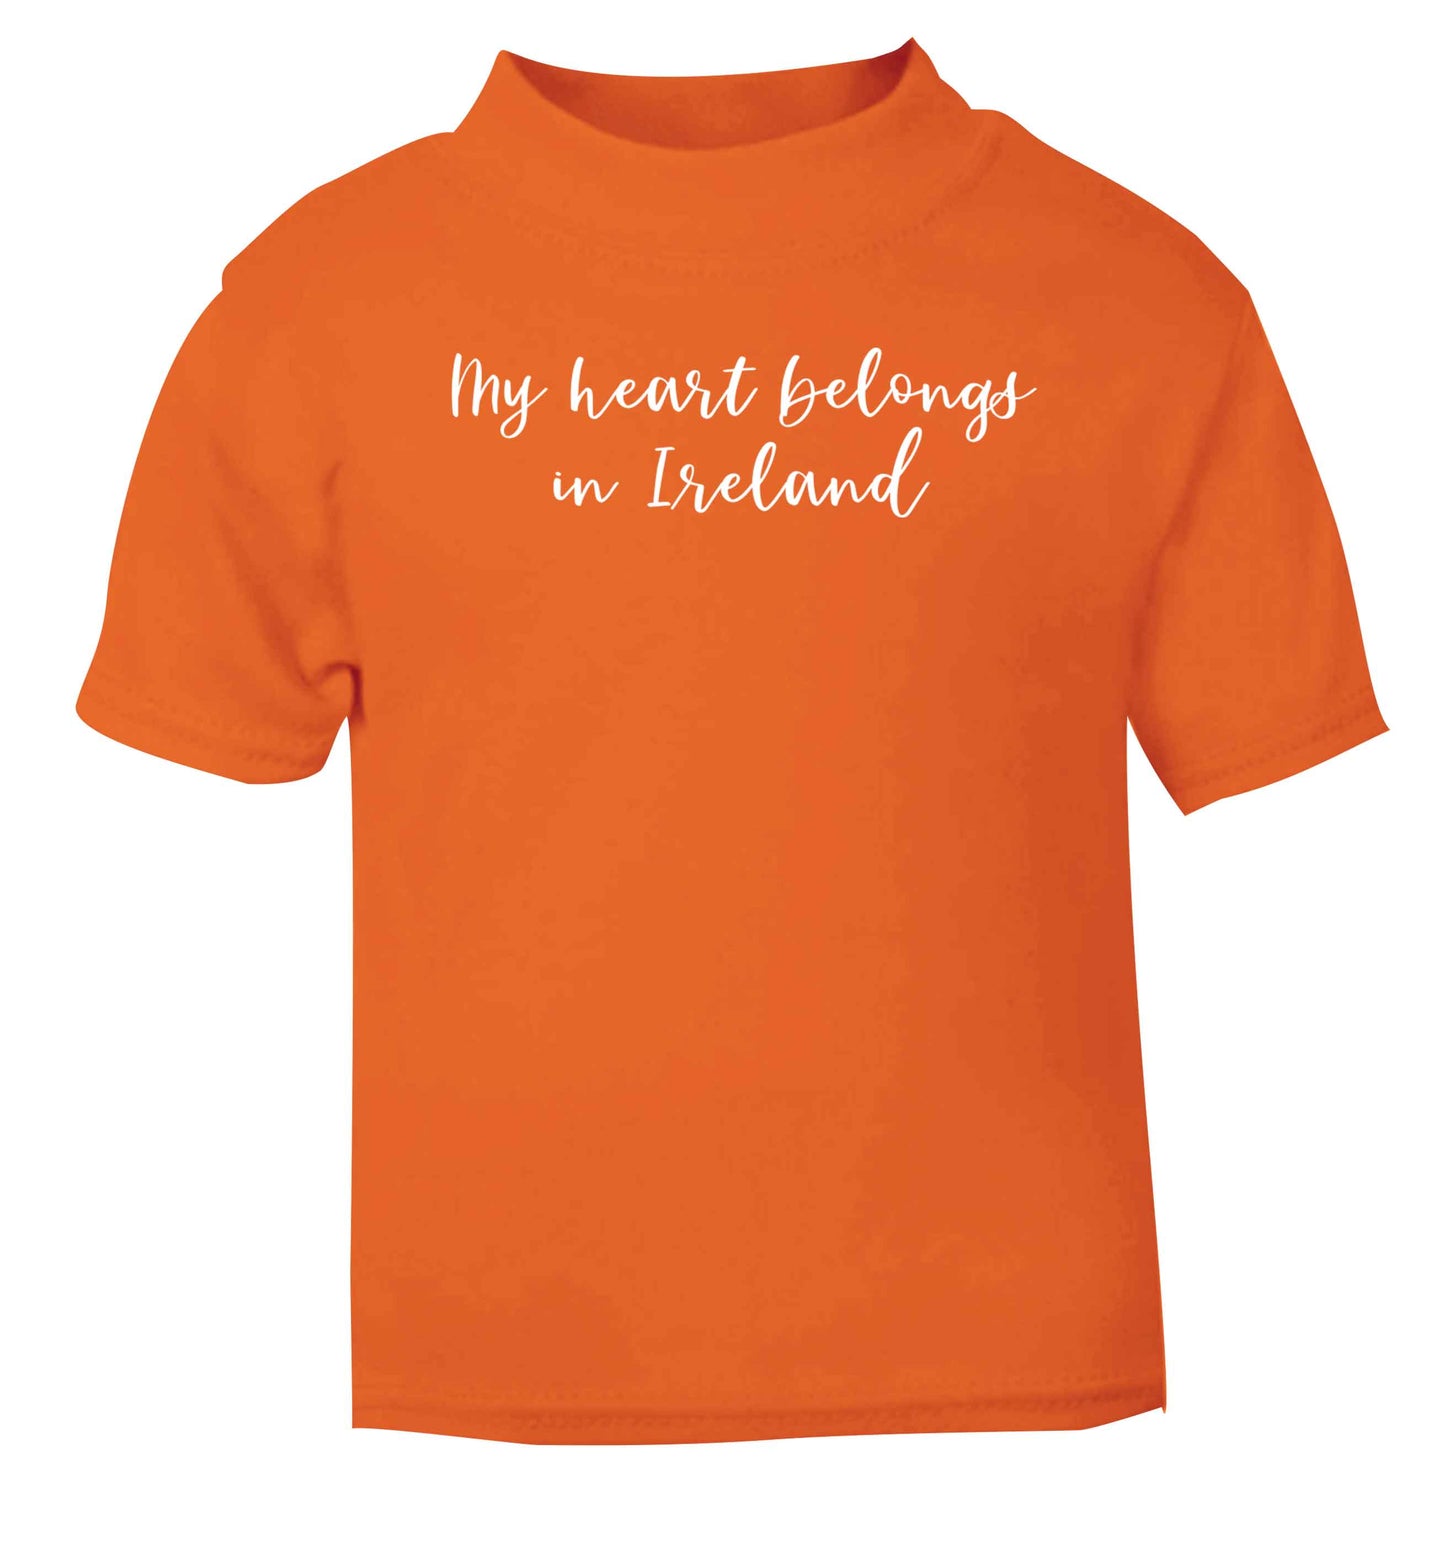 My heart belongs in Ireland orange baby toddler Tshirt 2 Years